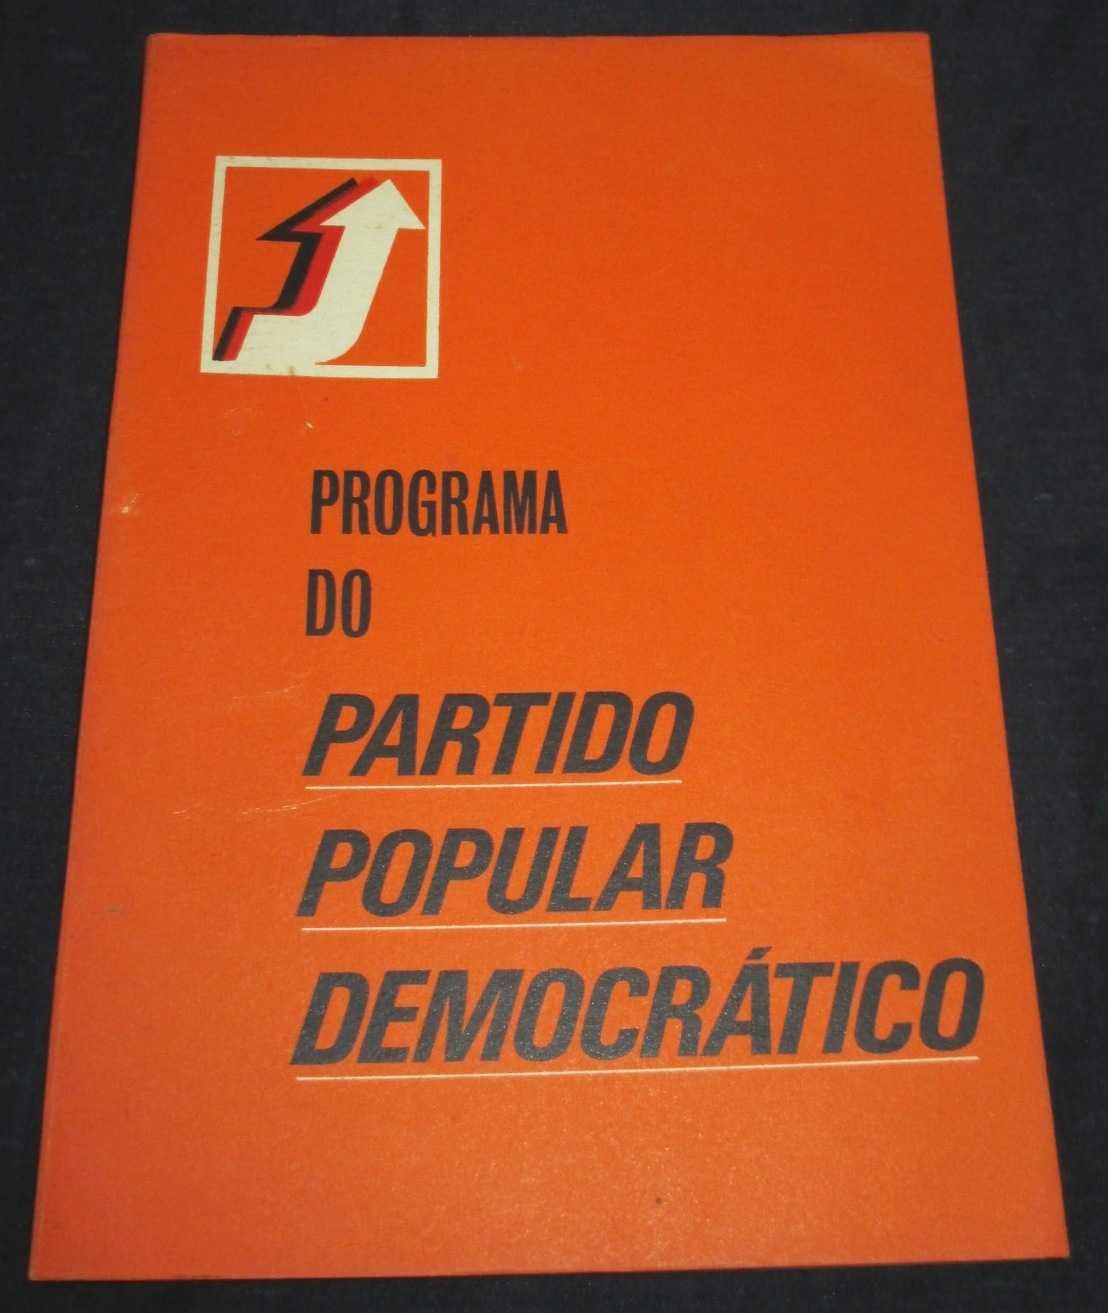 Livro A Social-Democracia para Portugal Programa PPD